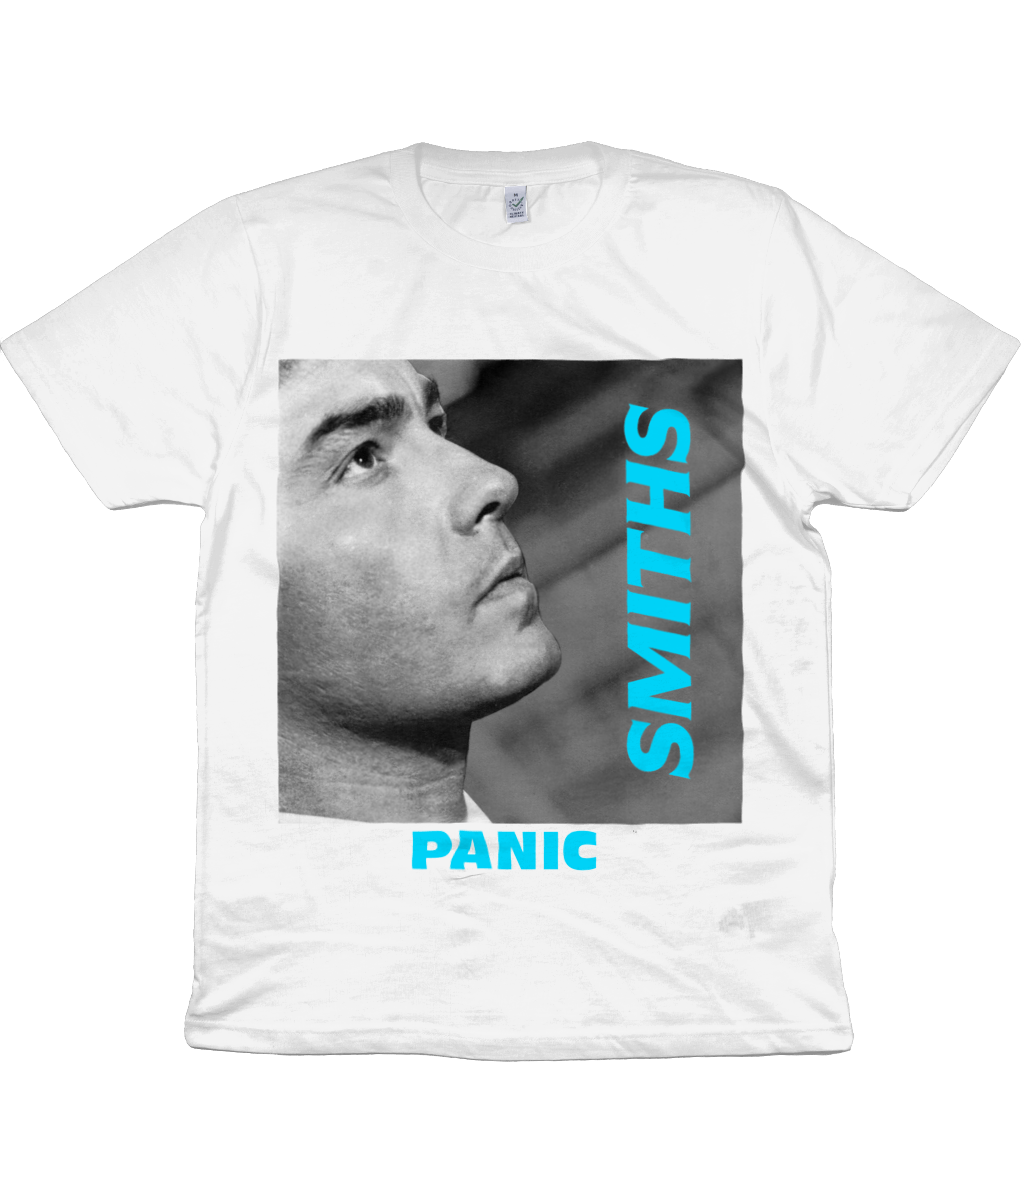 THE SMITHS - PANIC - 1986